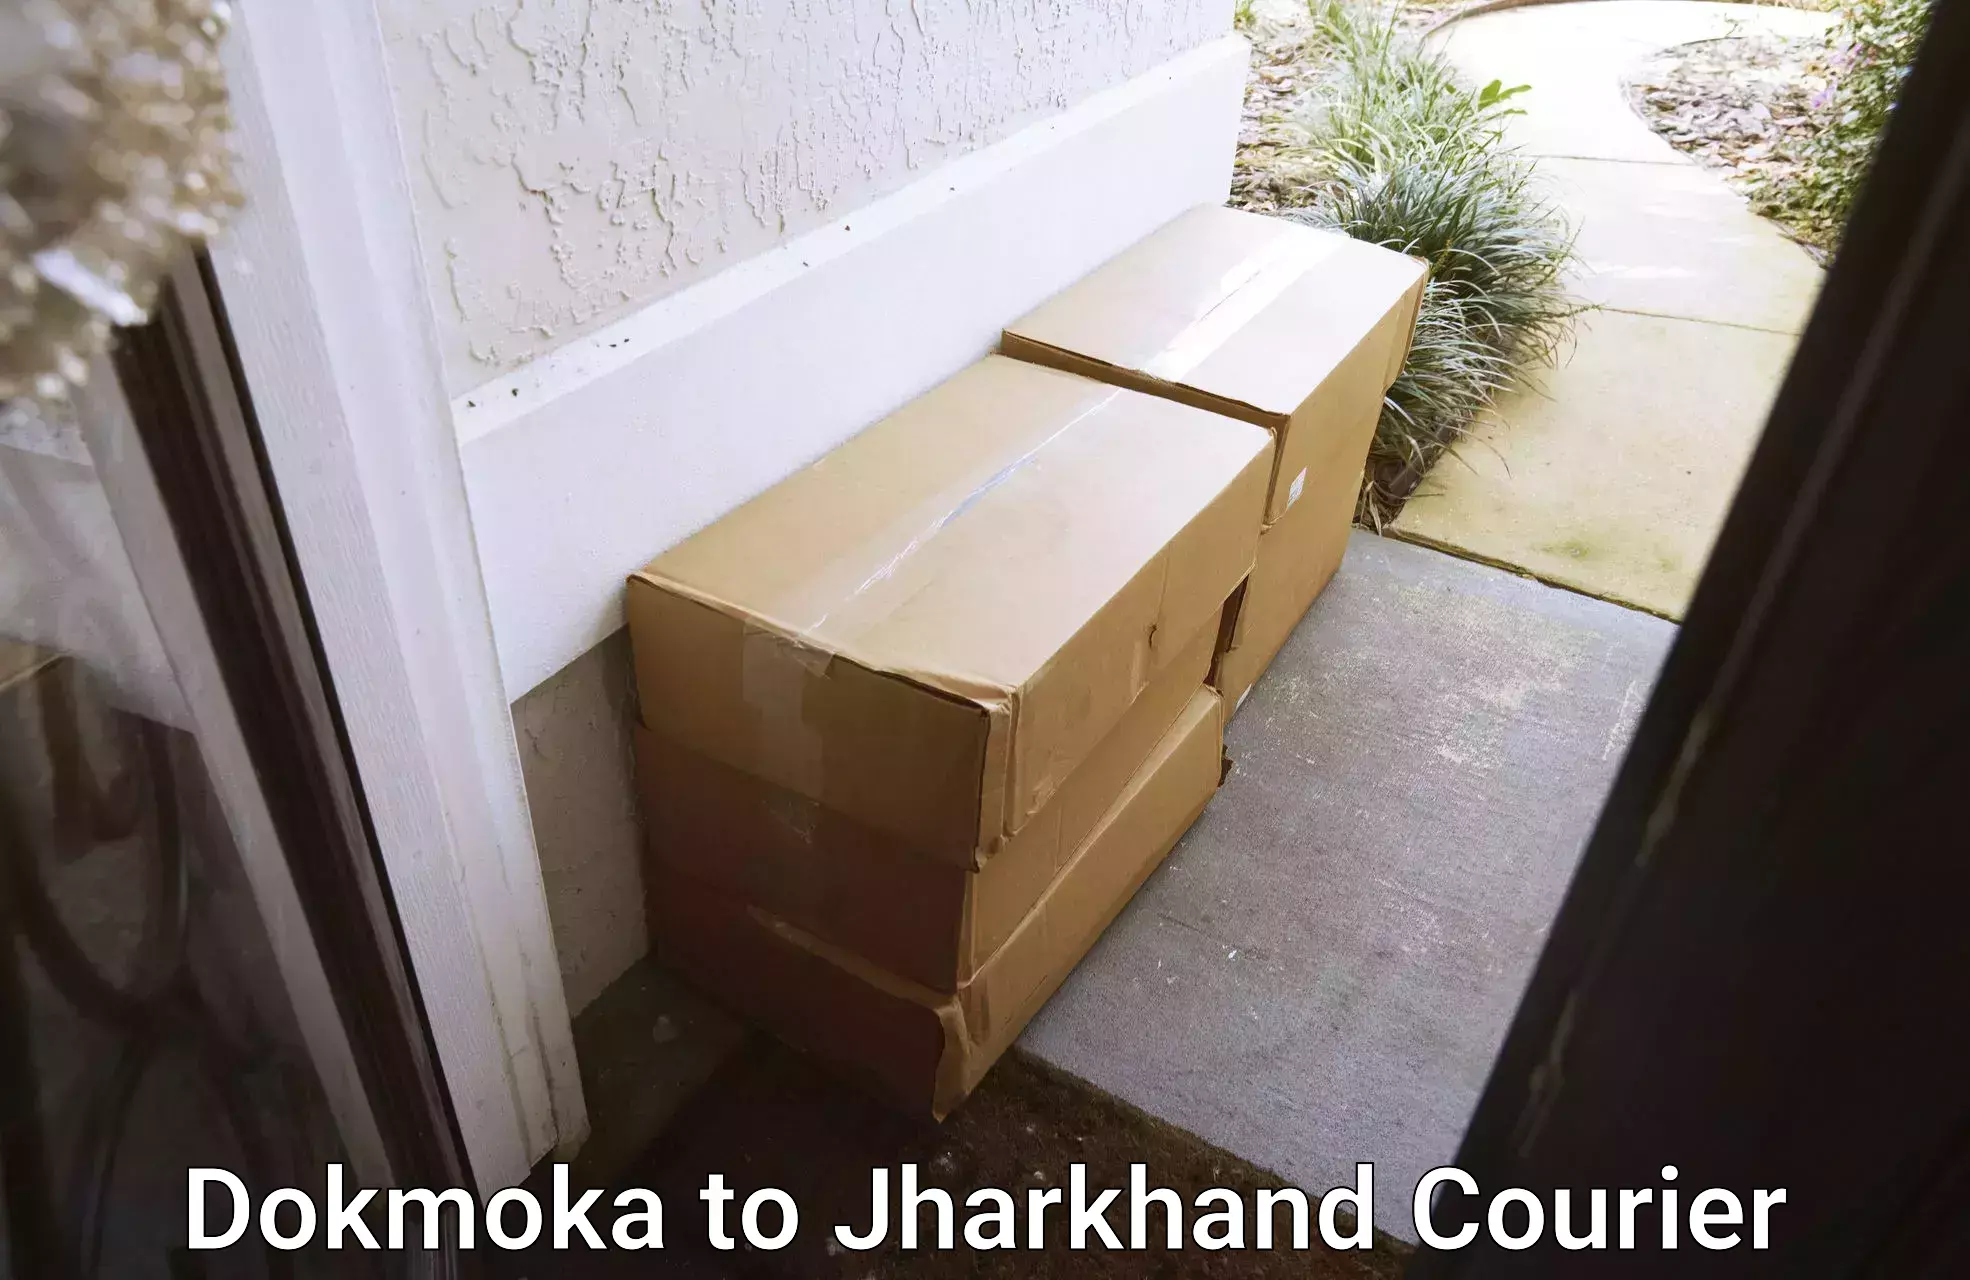 Residential courier service Dokmoka to Koderma